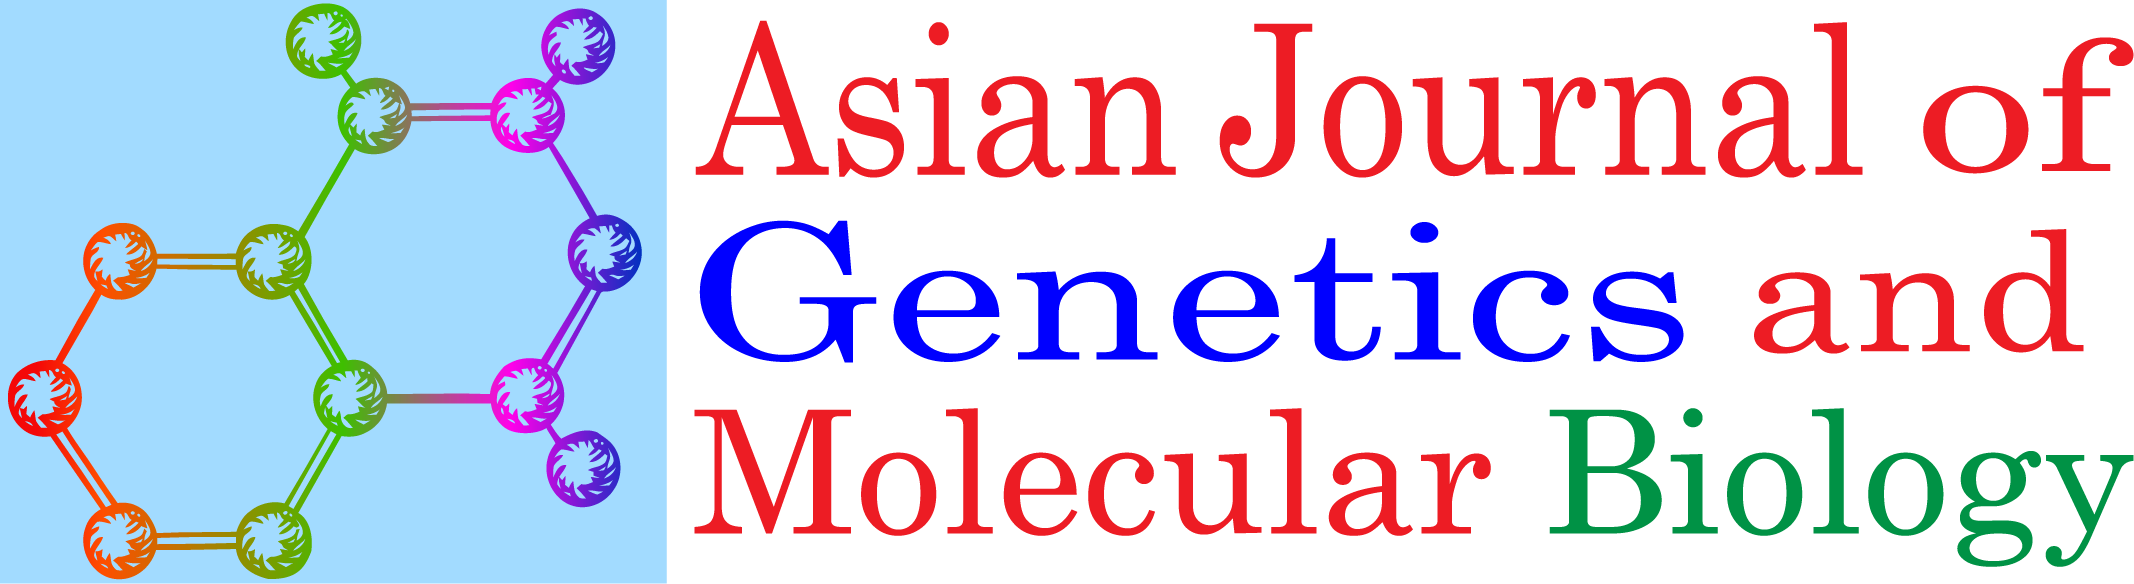 Asian Journal of Genetics and Molecular Biology (AJGMB)